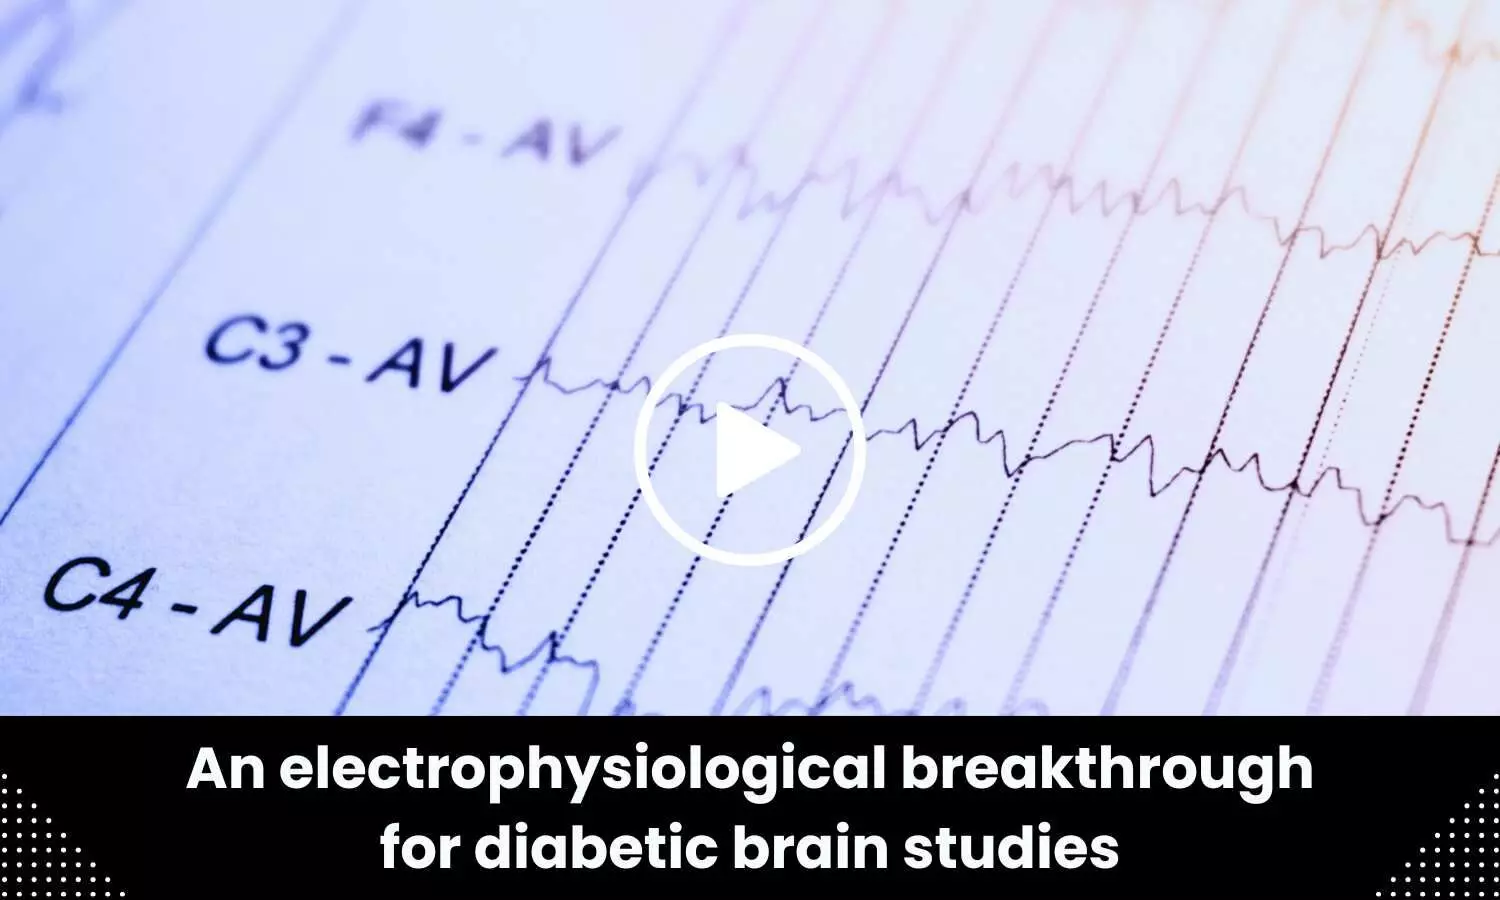 An electrophysiological breakthrough for diabetic brain studies